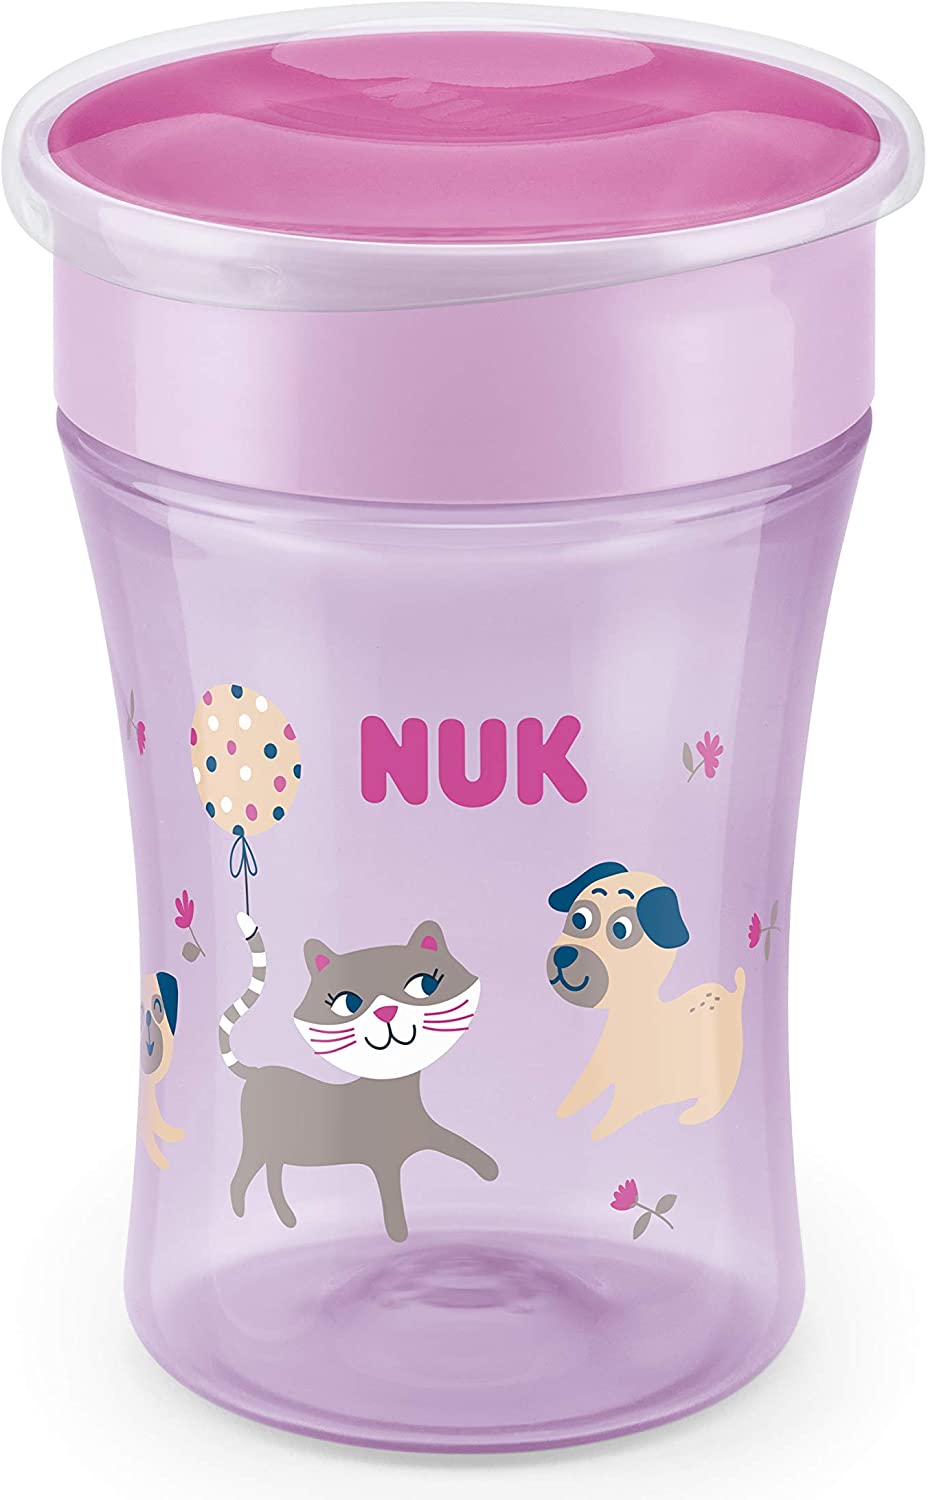 NUK Magic Cup bicchiere antigoccia | Bordo anti-rovesciamento a 360° | 8+ mesi | Senza BPA | 230 ml | gatta (rosa)